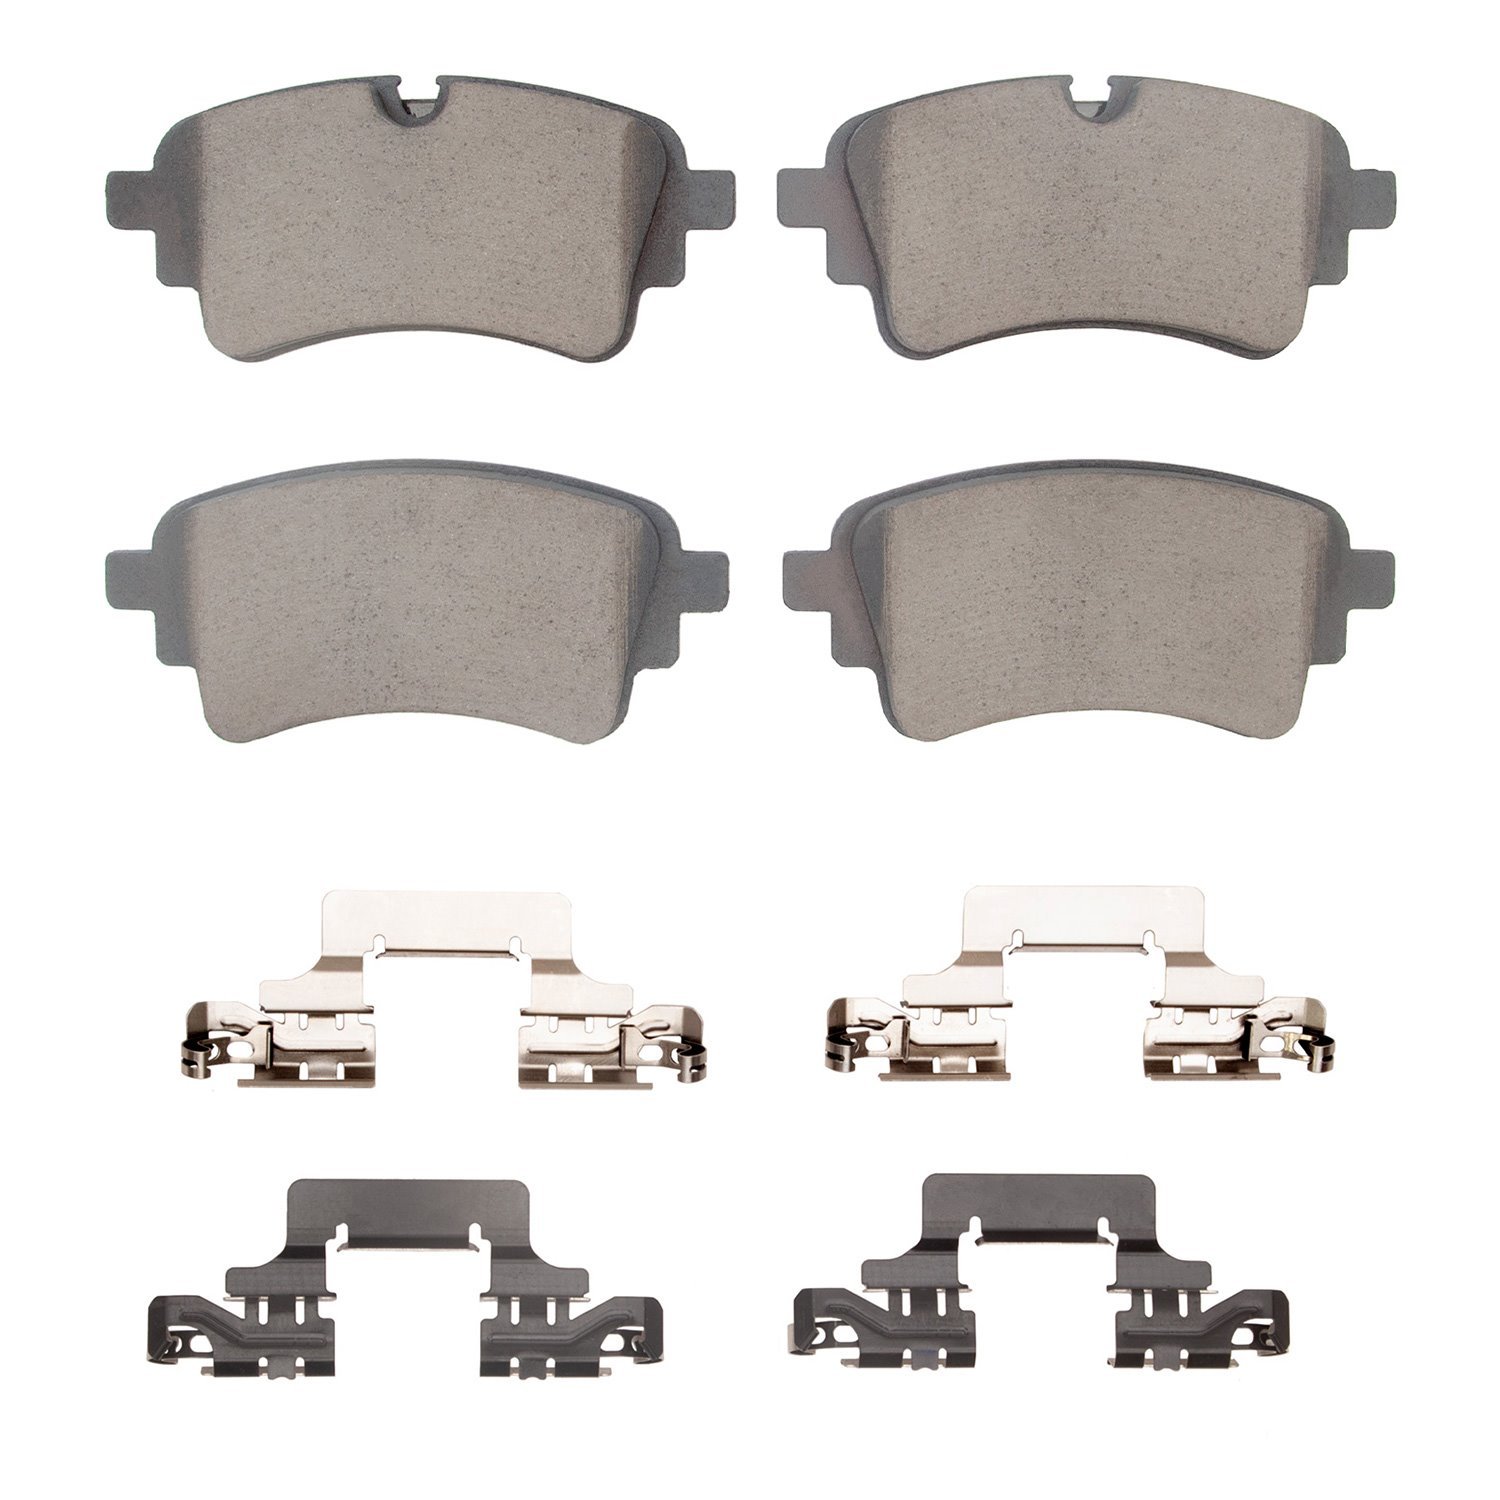 1600-2364-01 5000 Euro Ceramic Brake Pads & Hardware Kit, Fits Select Audi/Volkswagen, Position: Rear